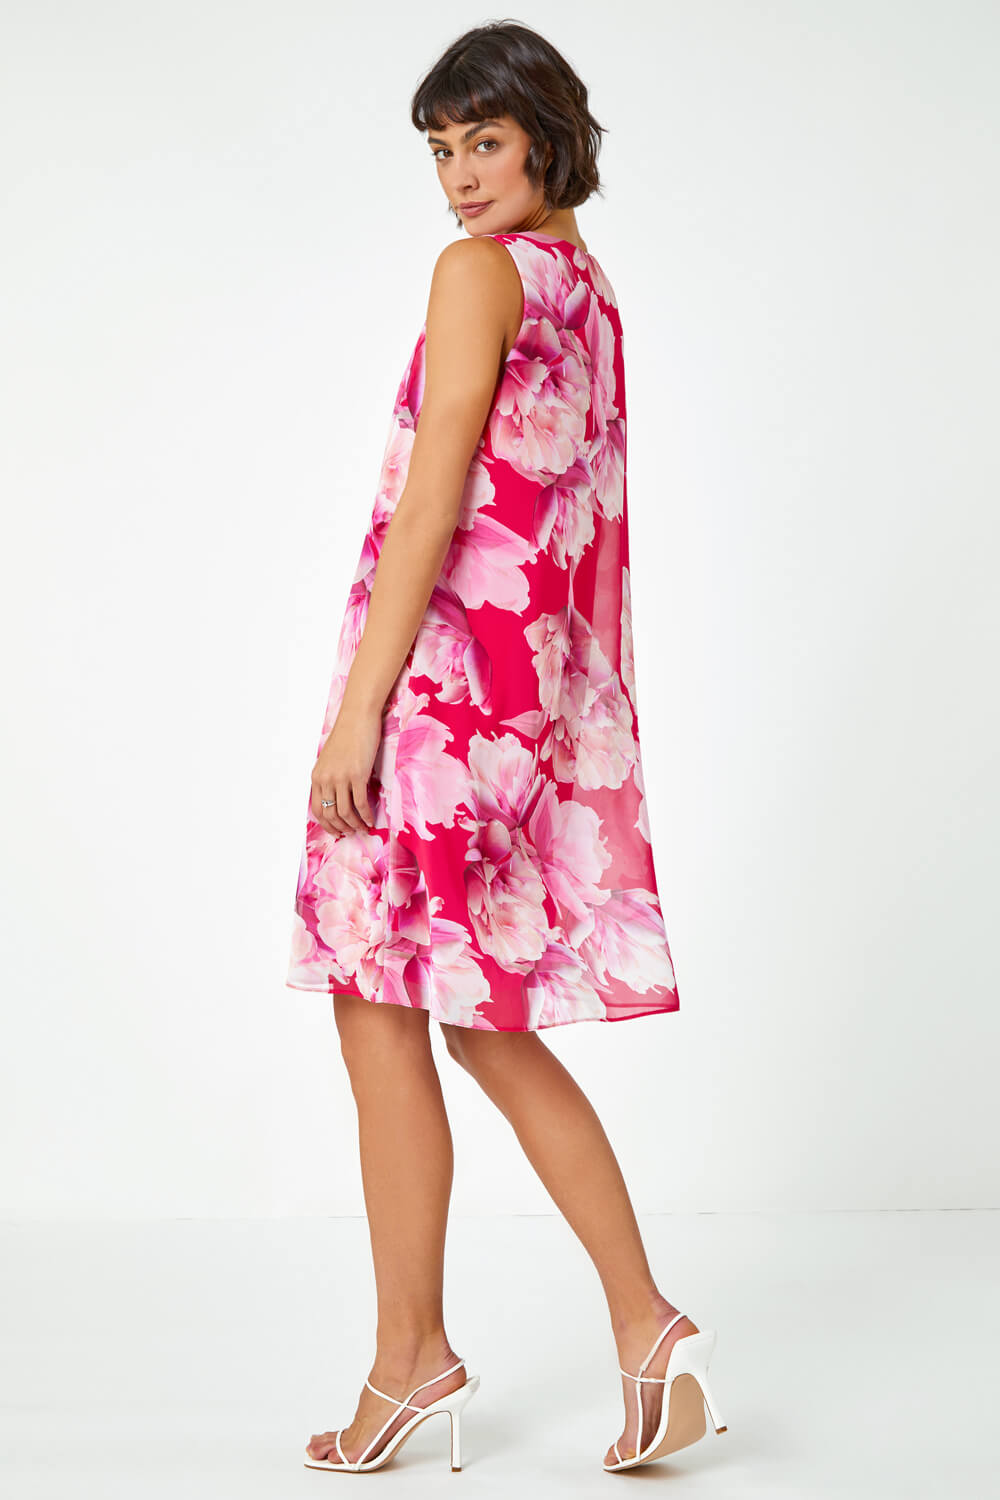 PINK Sleeveless Floral Chiffon Overlay Dress, Image 3 of 5